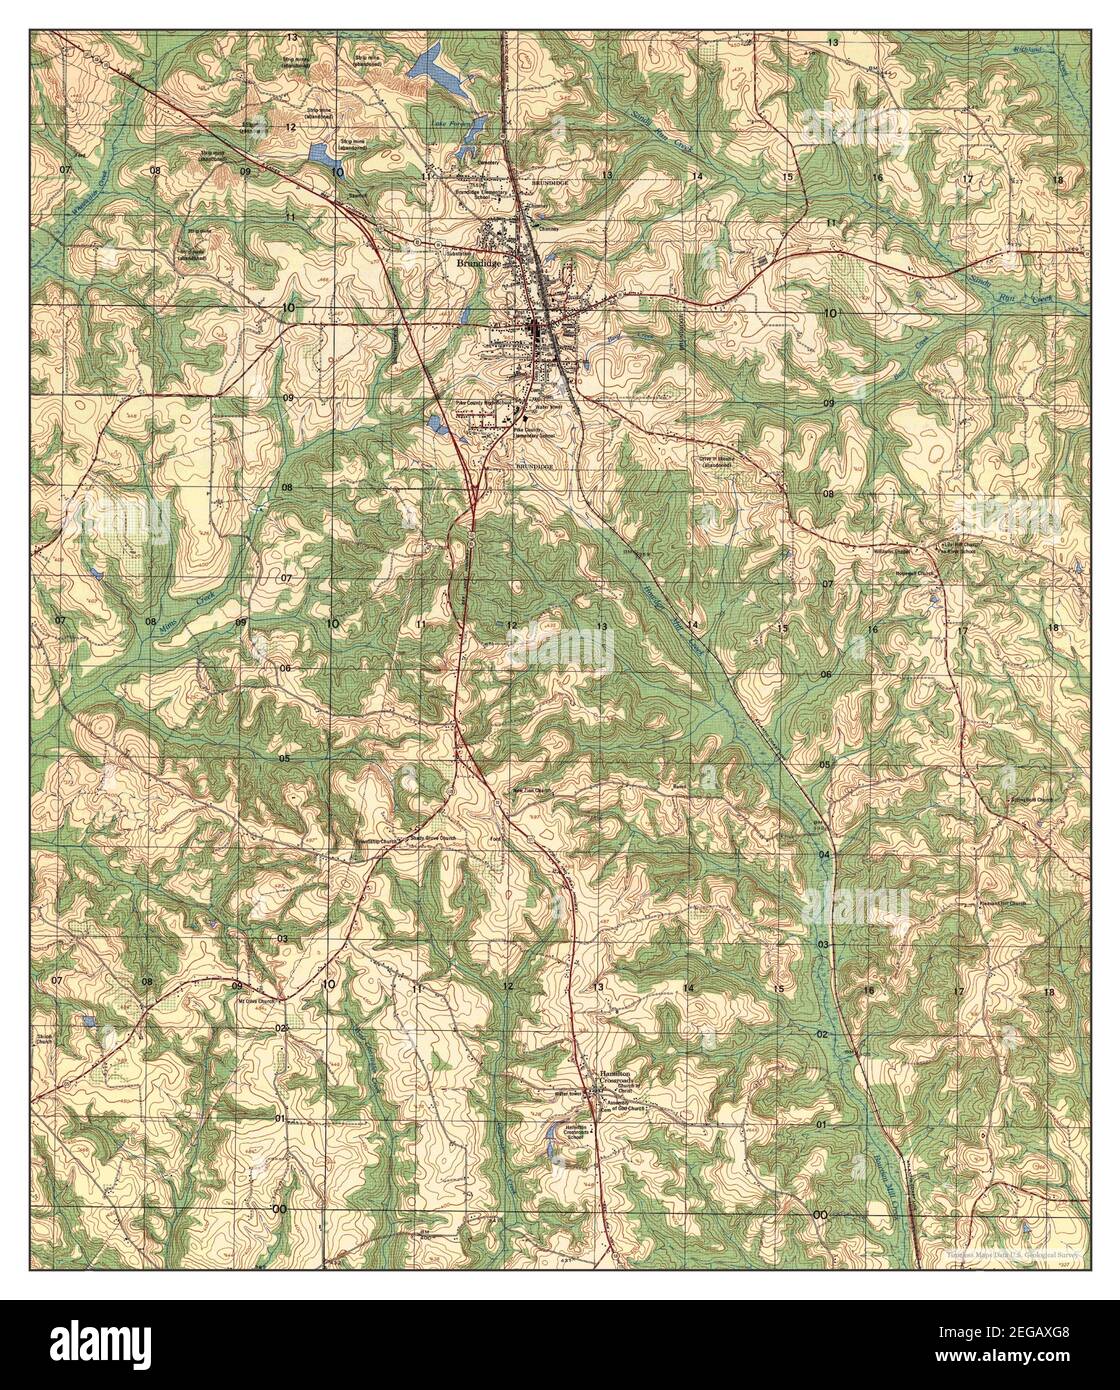 Brundidge, Alabama, map 1962, 1:25000, United States of America by Timeless Maps, data U.S. Geological Survey Stock Photo